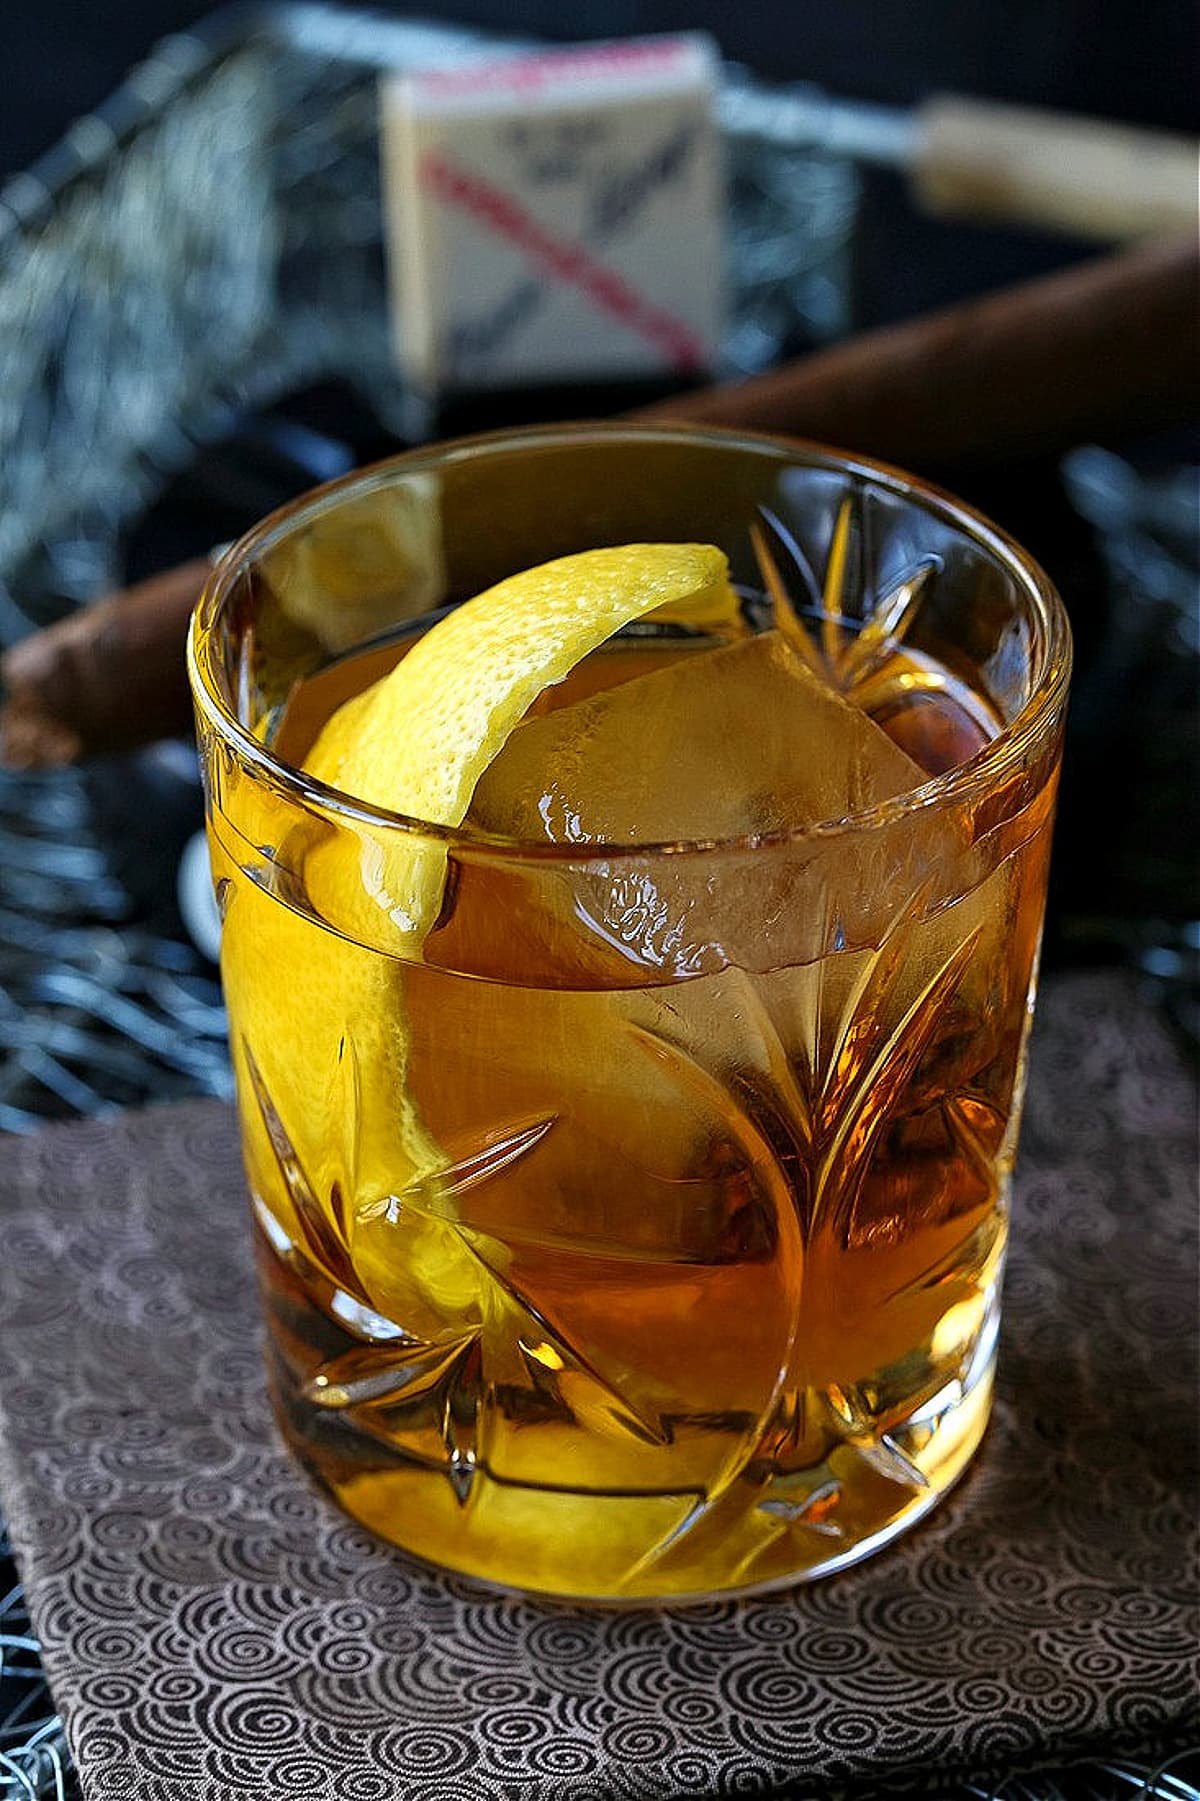 bourbon cocktail with large lemon peel garnish and ice